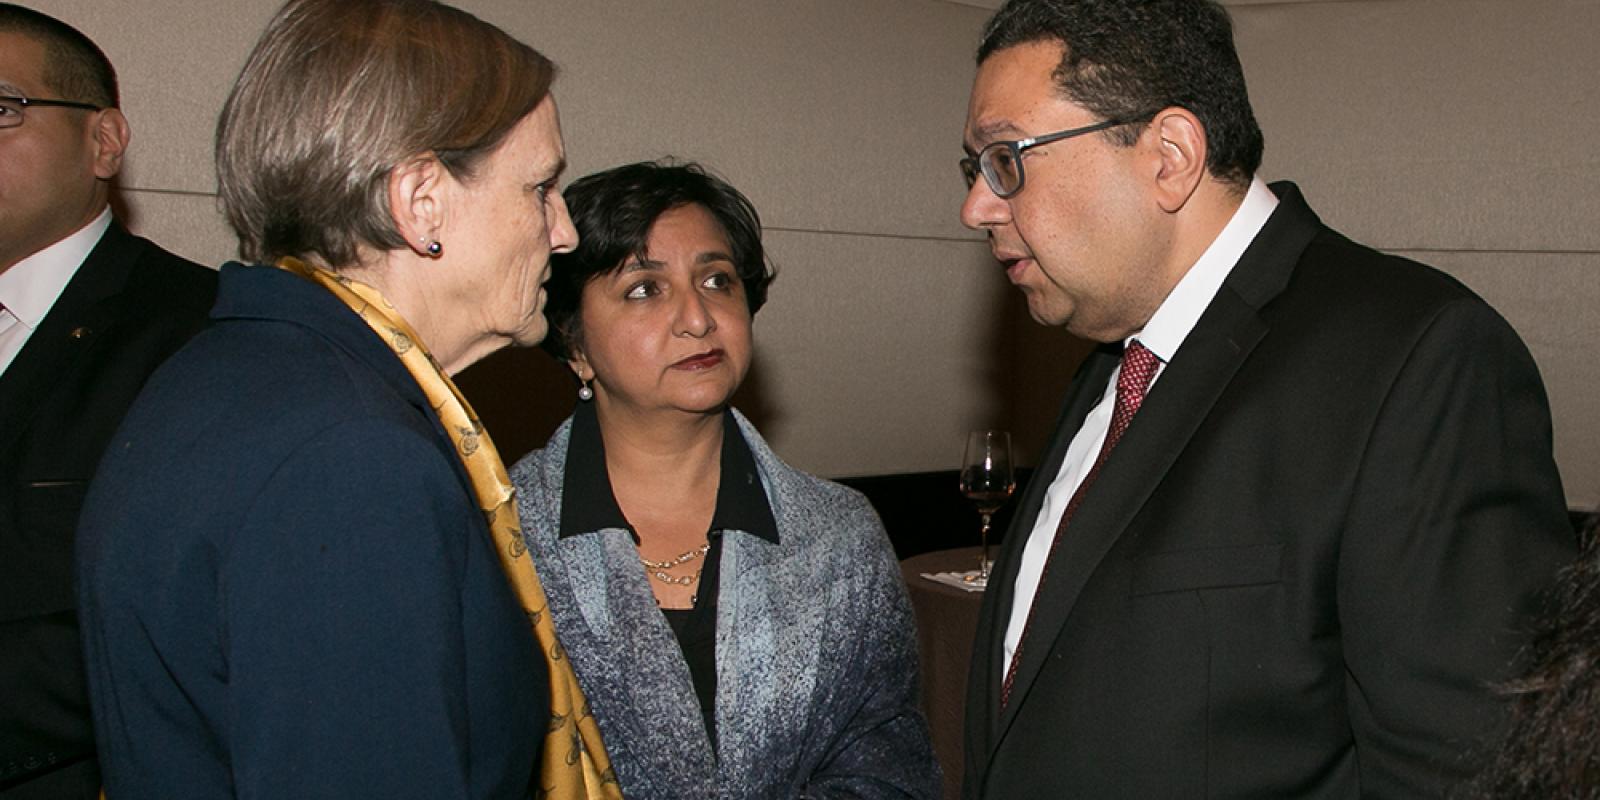 Former AUC President Lisa Anderson, Hania Sholkamy and Ziad Bahaa-Eldin